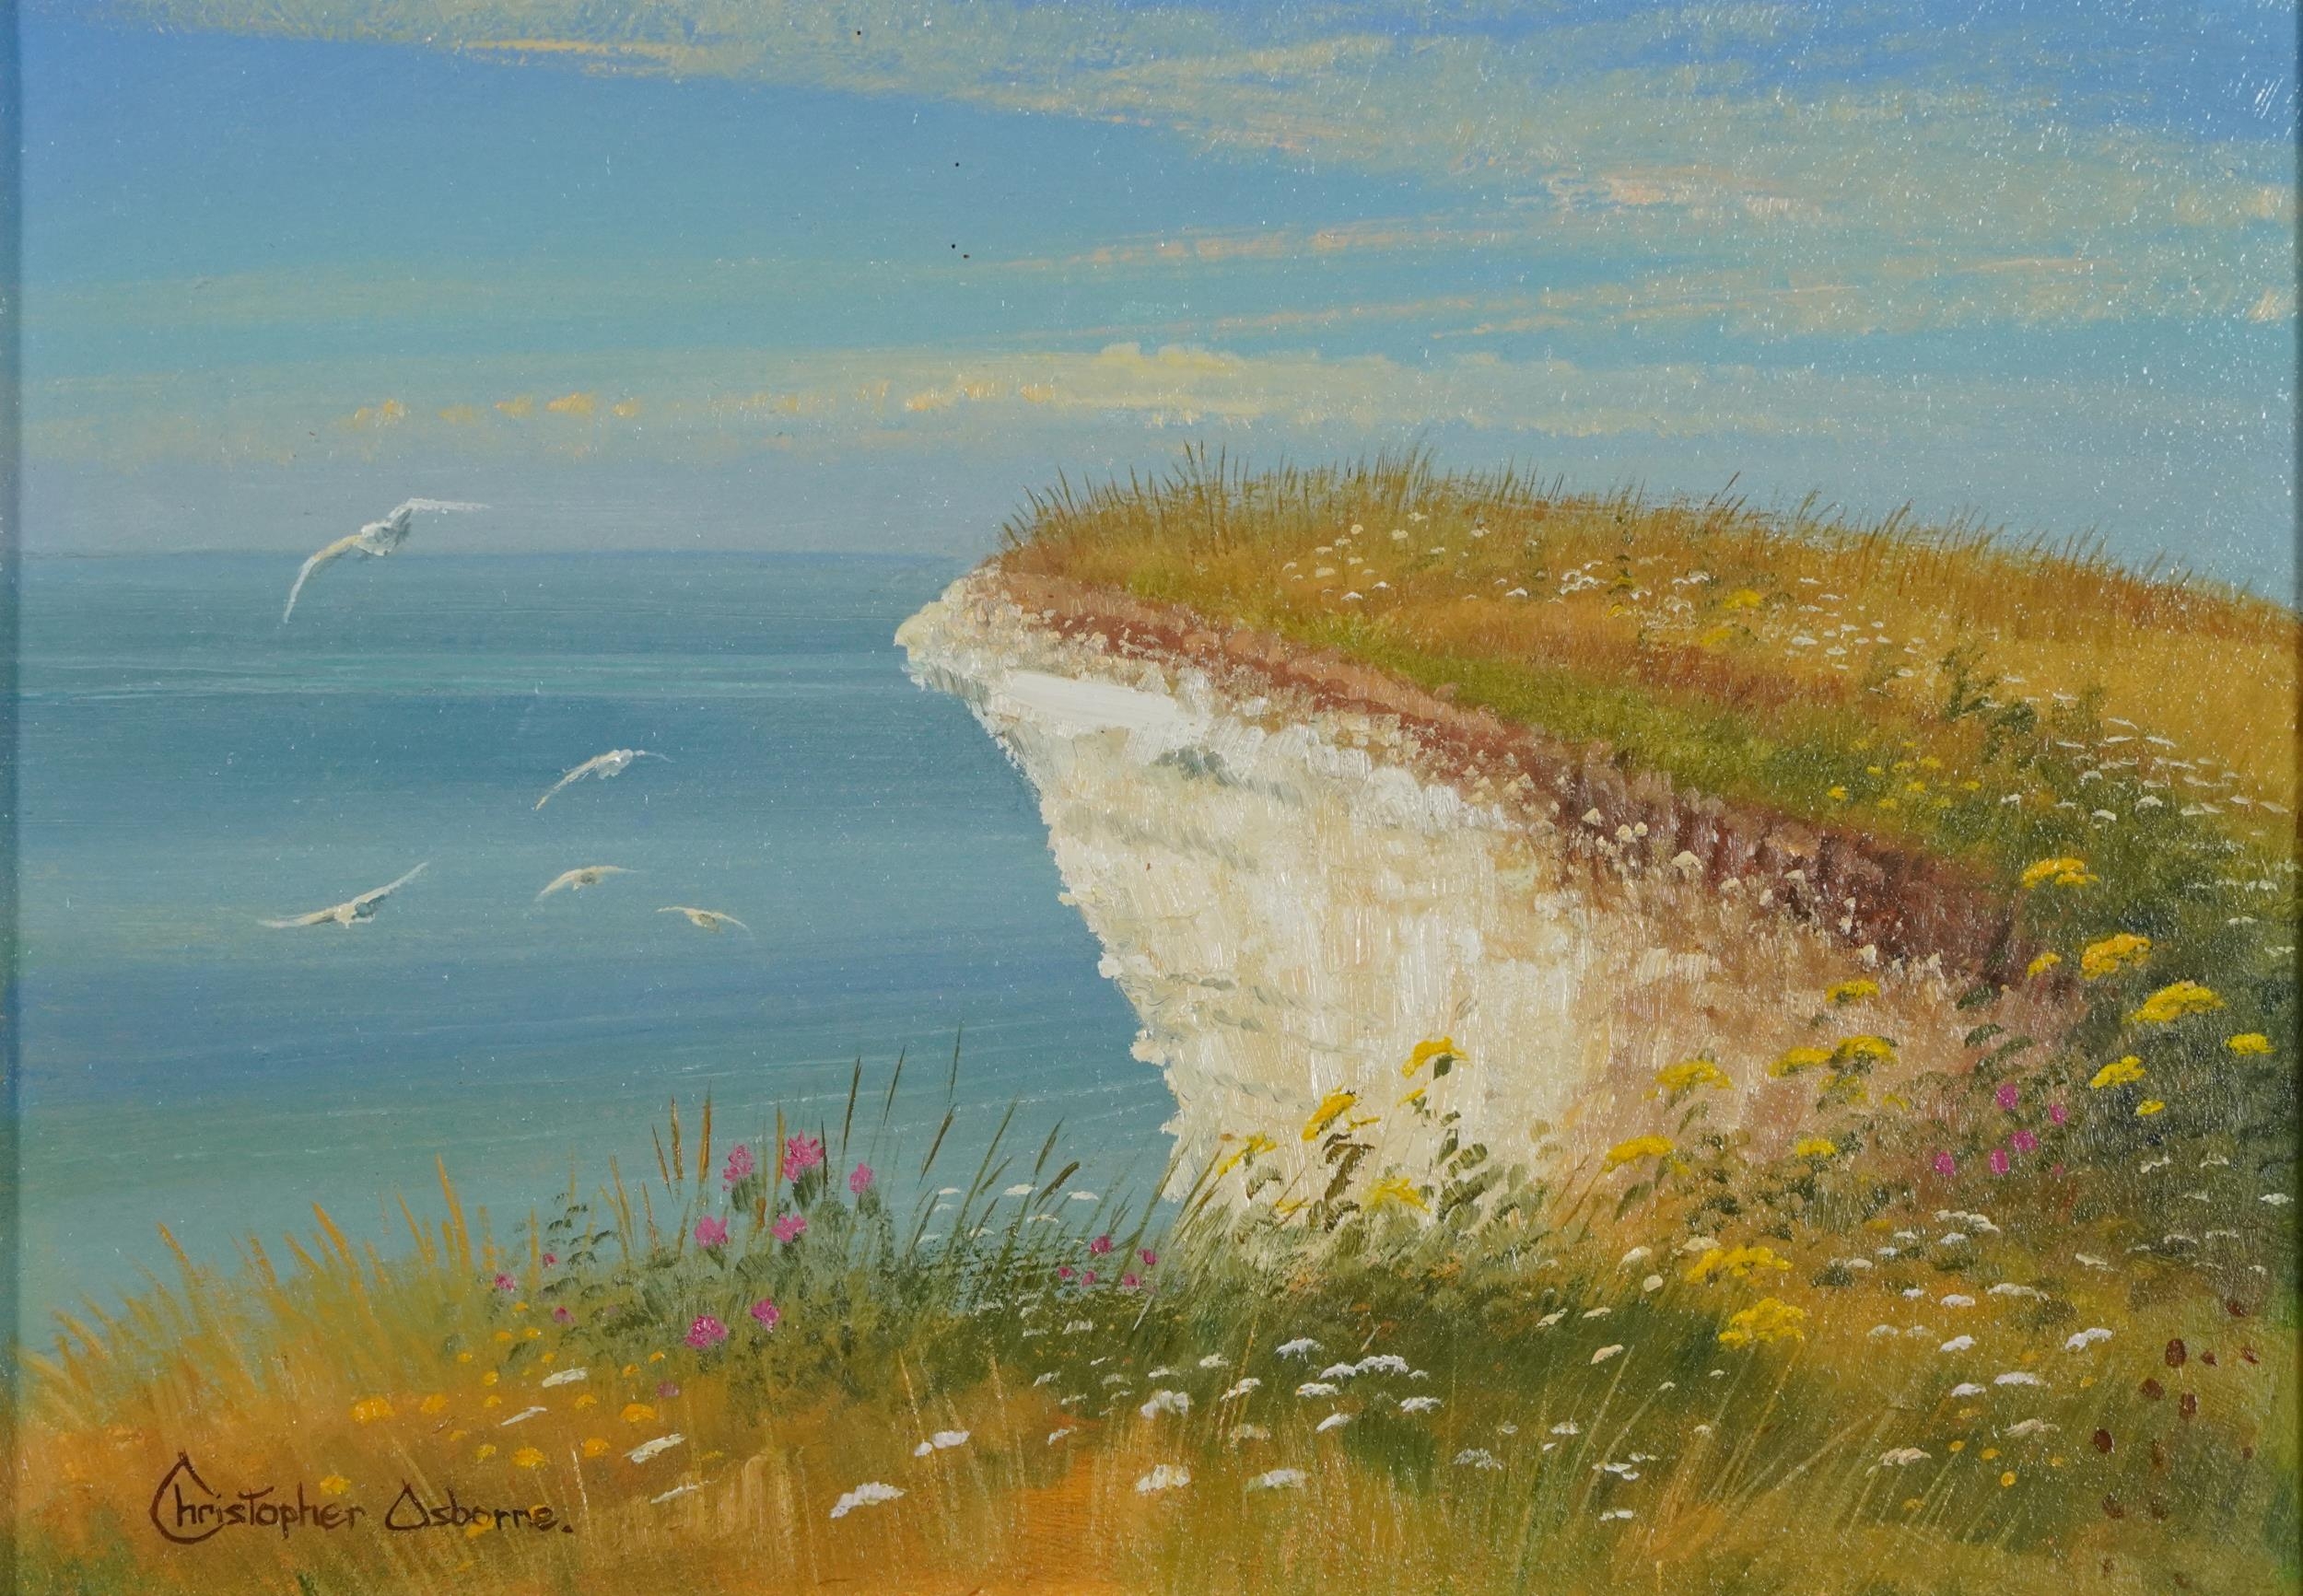 Christopher Osborne - White cliff edge, oil on board, details verso, mounted and framed, 25cm x 17cm